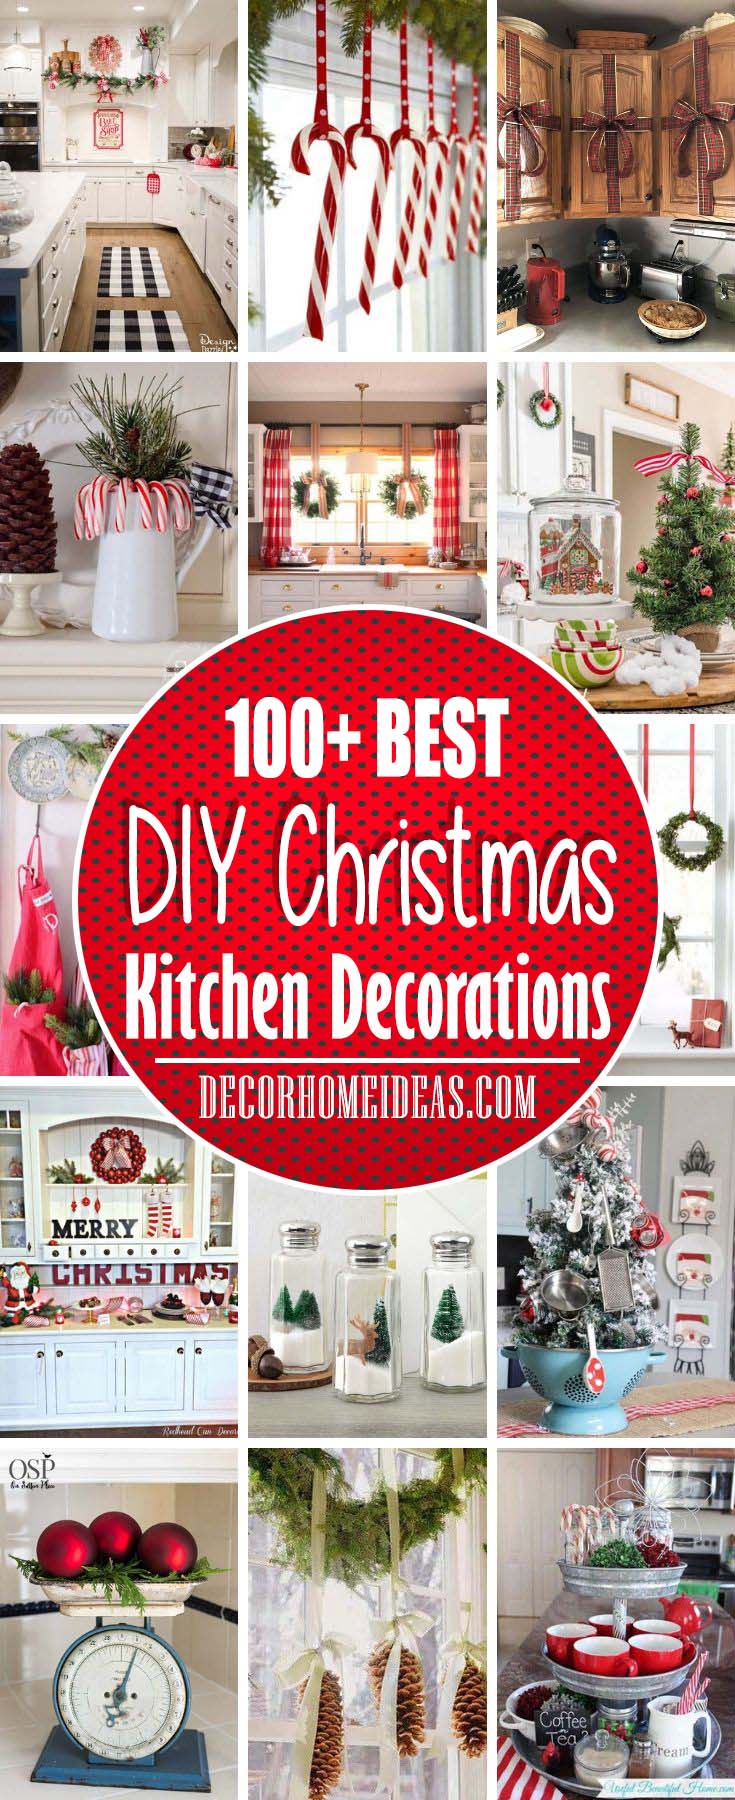 Best Kitchen Christmas Decorations #Christmas #diy #kitchen #decorhomeideas